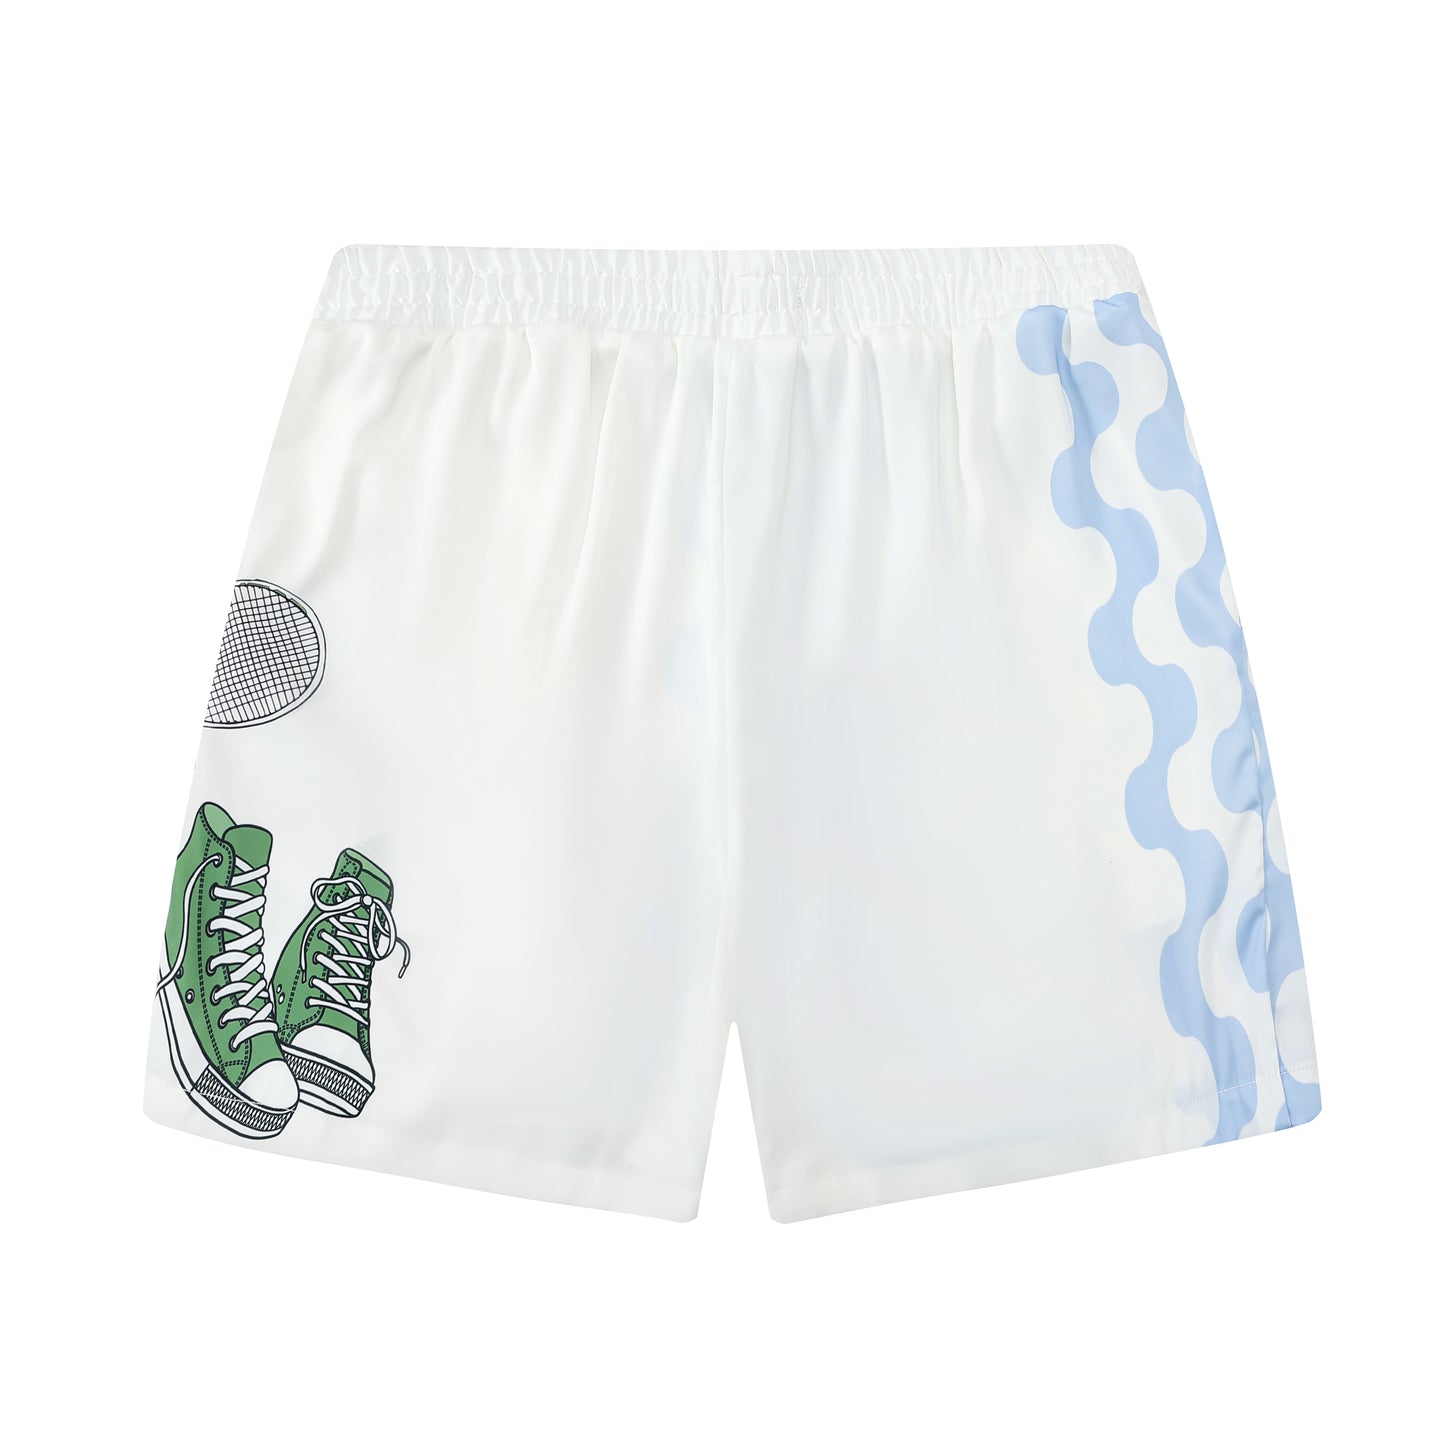 Tennis Element Print Waistband Shorts